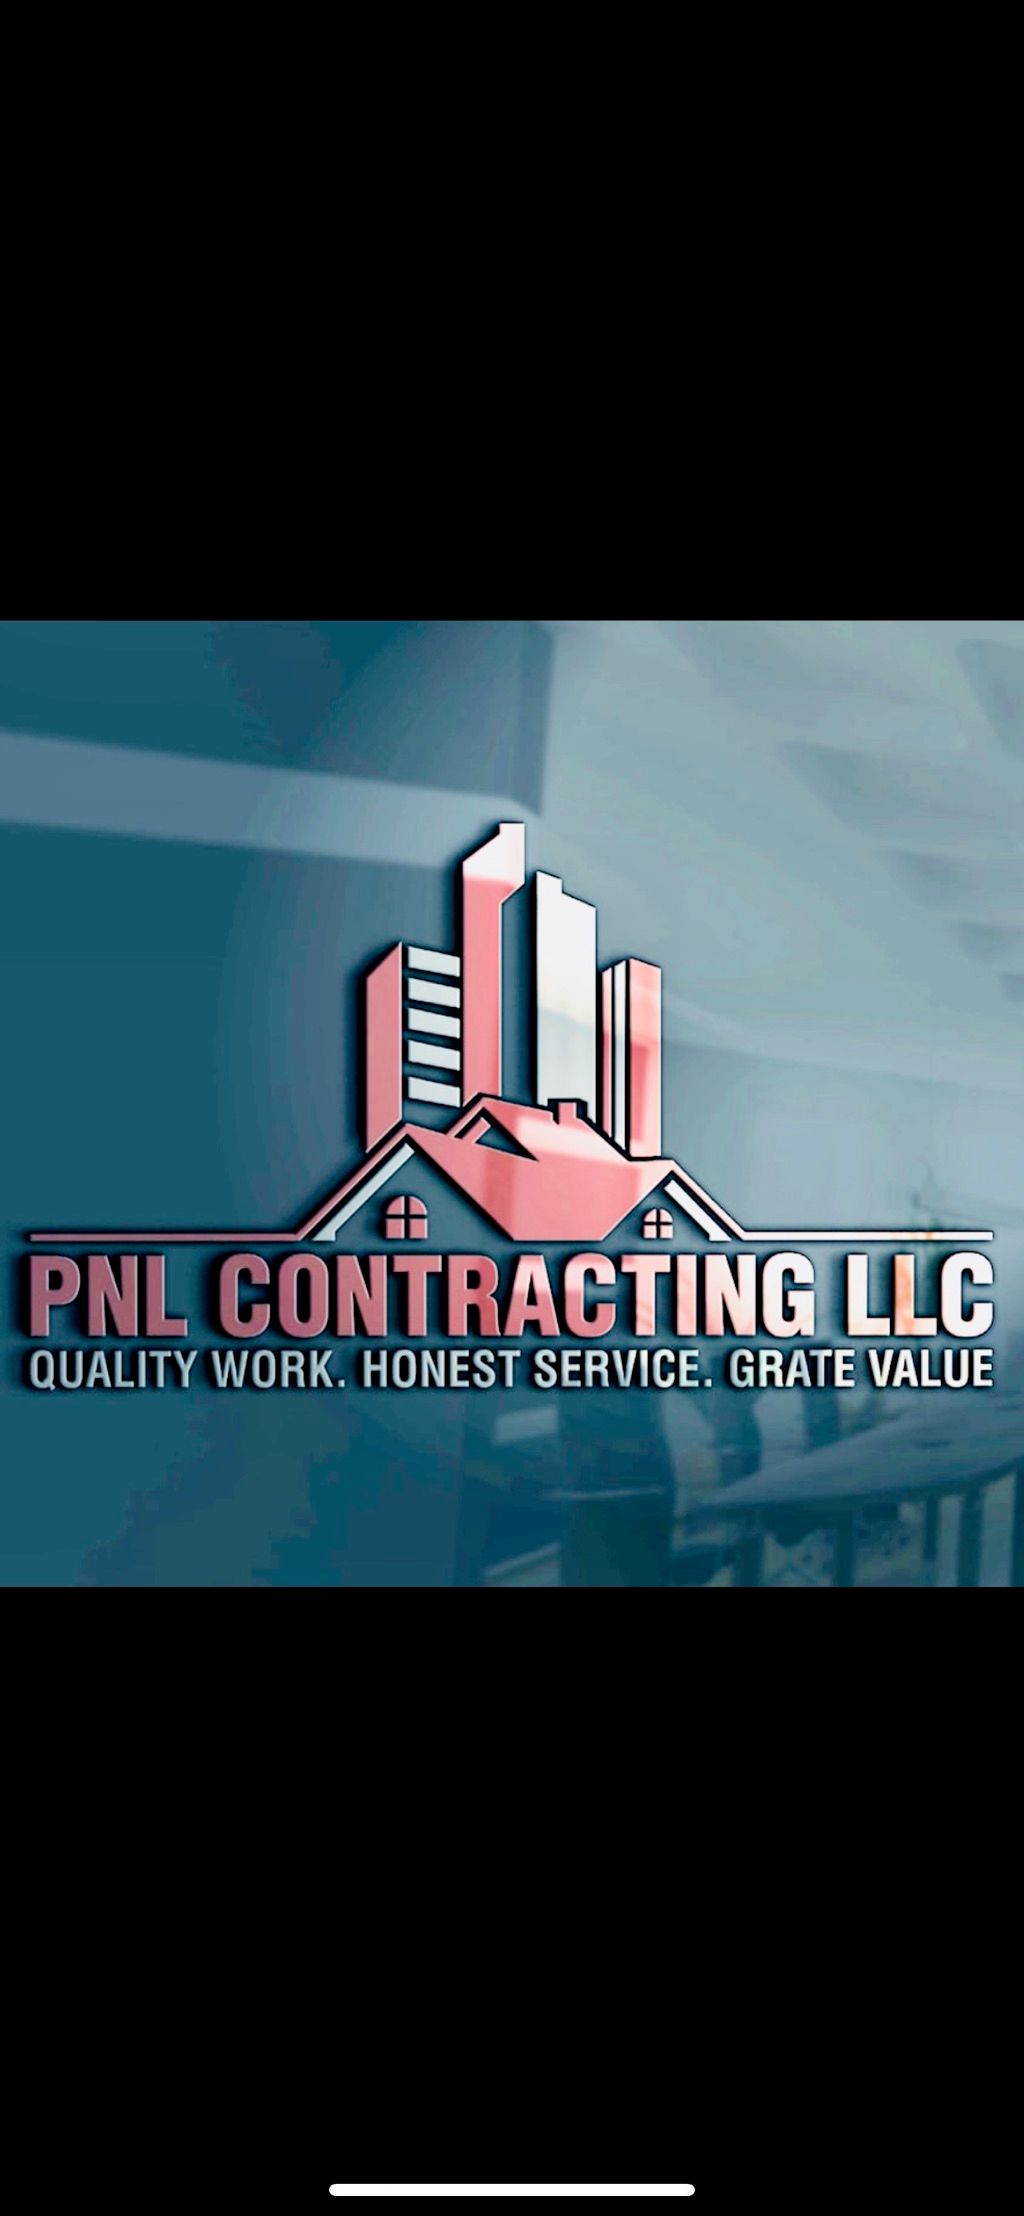 PNL CONTRACTING LLC